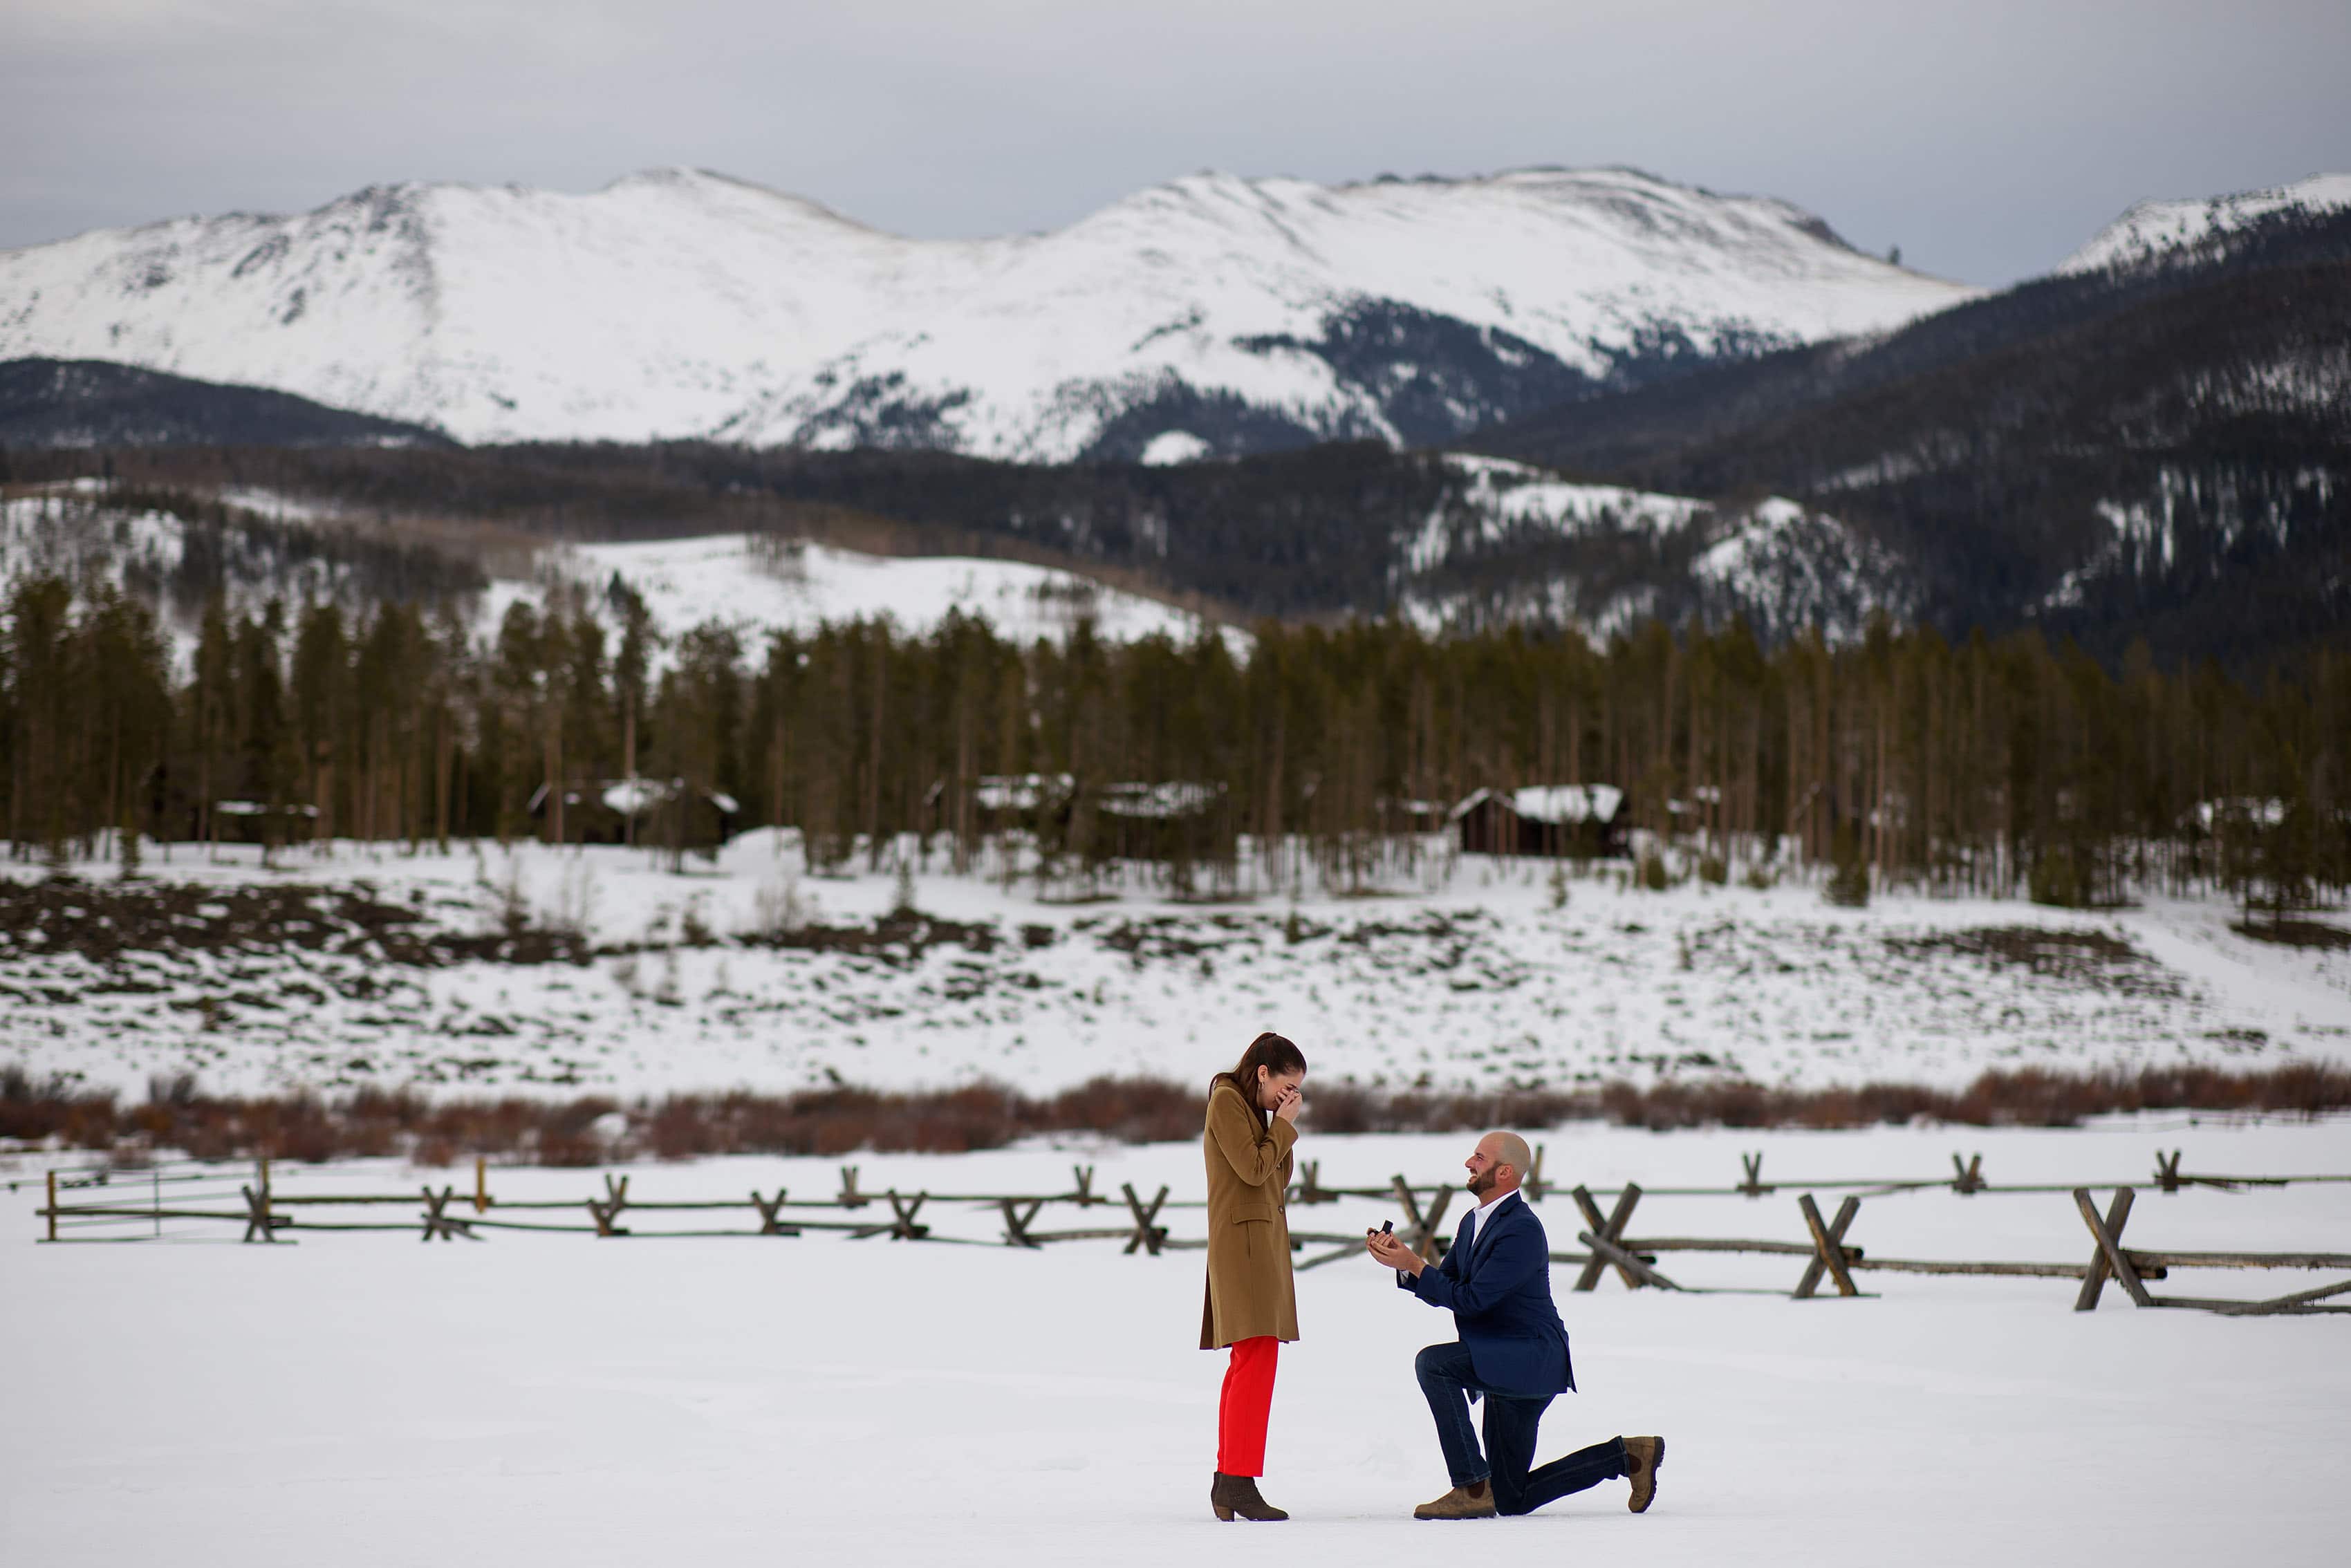 Michael proposes to Sarah at during the winter at Devil’s Thumb Ranch in Tabernash, Colorado